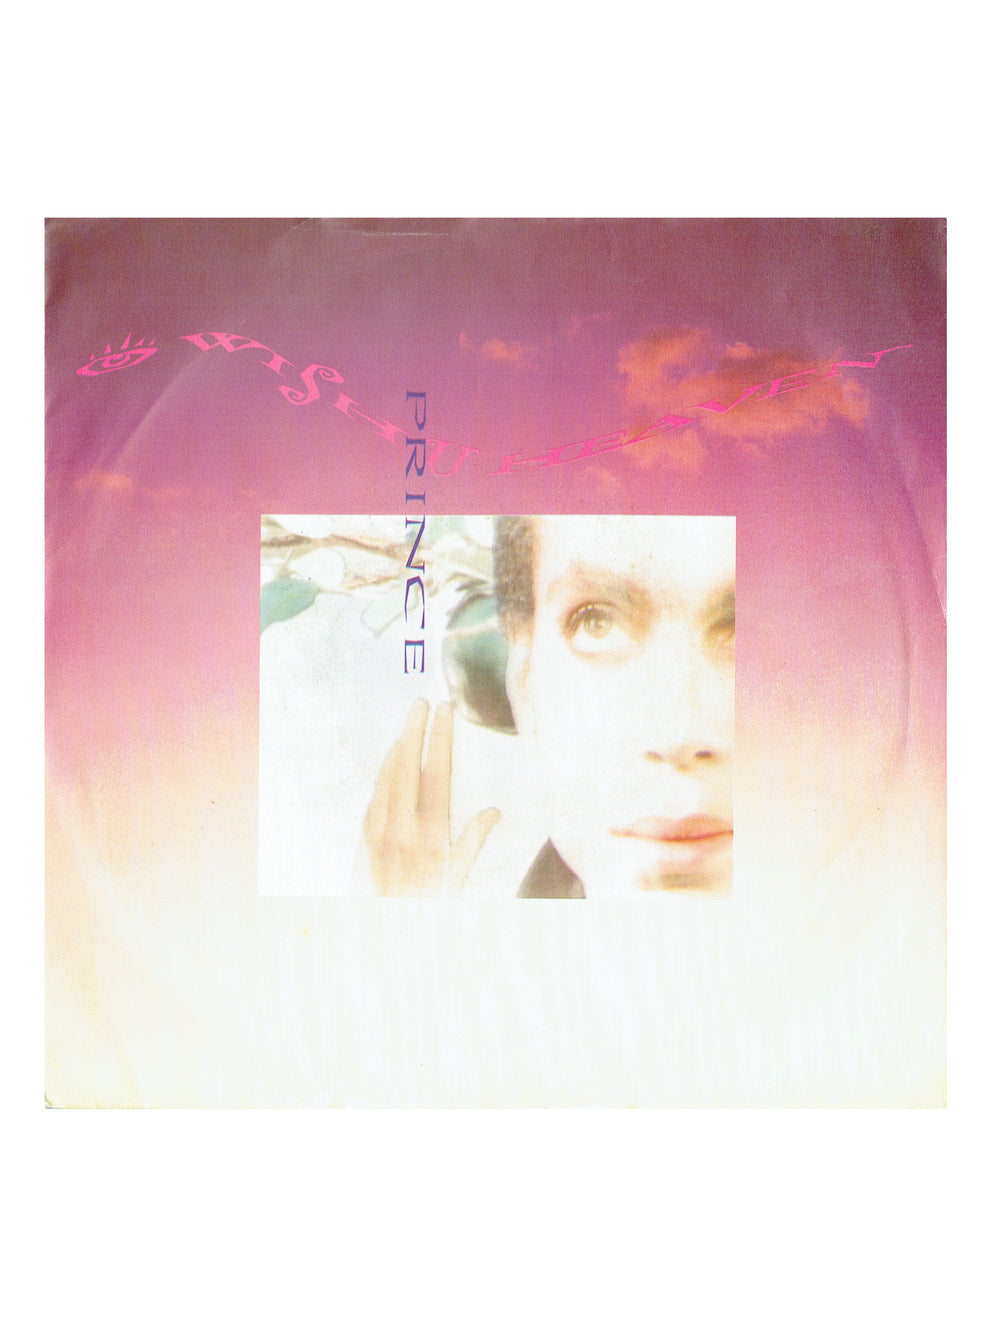 Prince – I Wish U Heaven Vinyl 7" Single UK Preloved: 1987